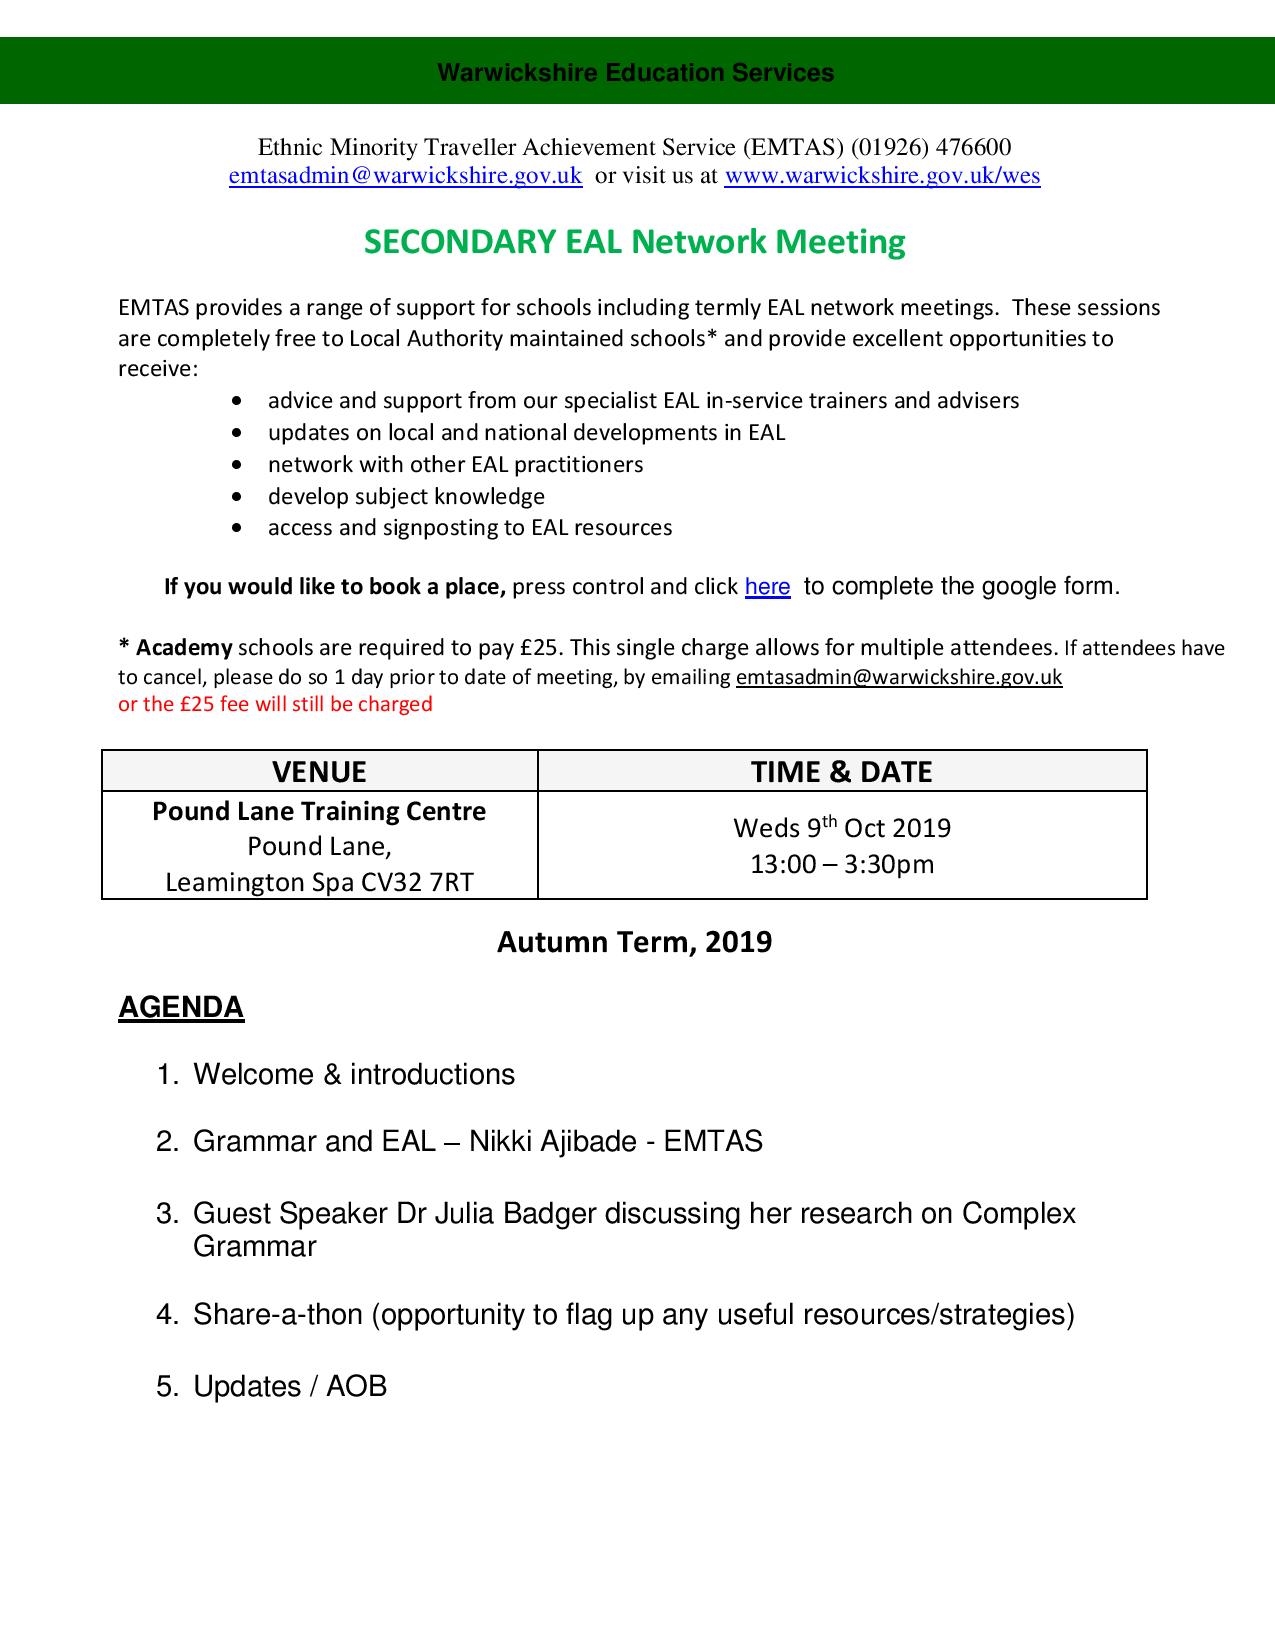 Secondary EAL Network Meetings